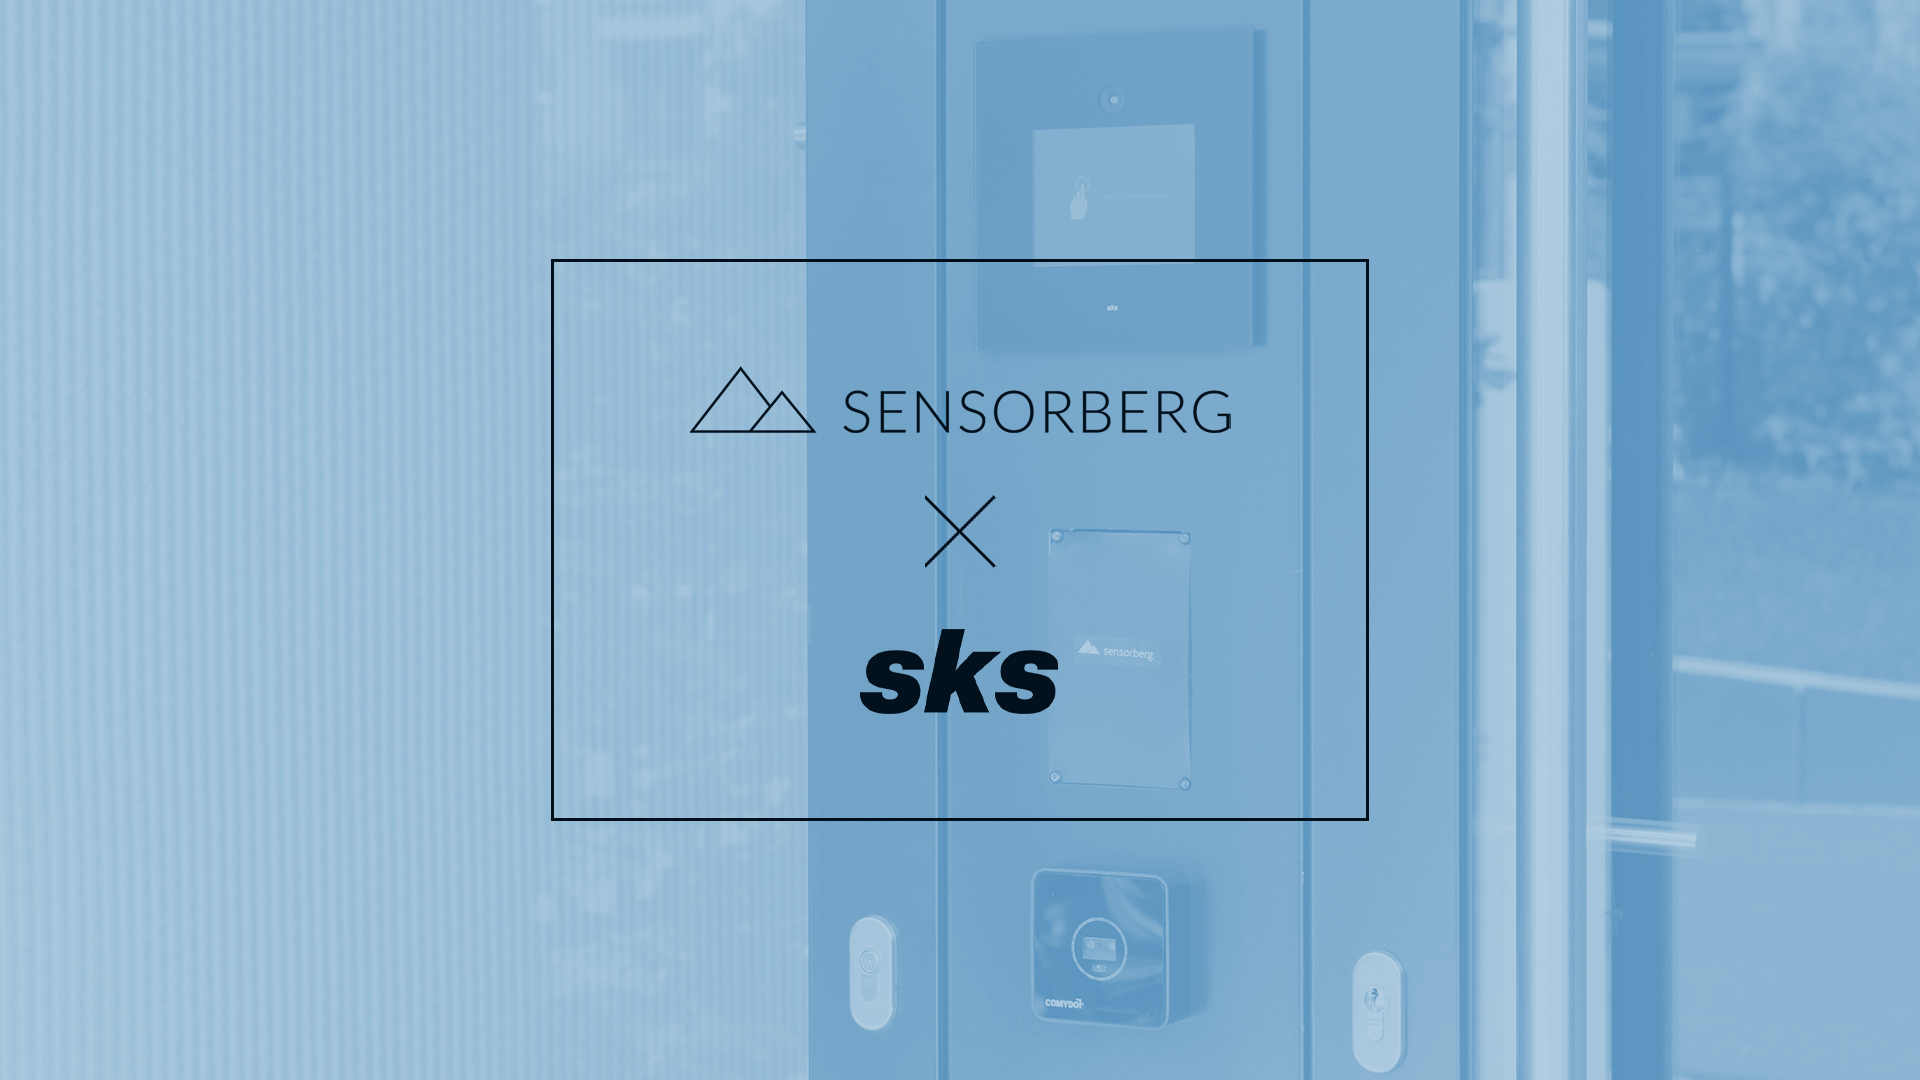 Sensorberg and SKS-Kinkel Cooperate for More Comfort in the Digital Building